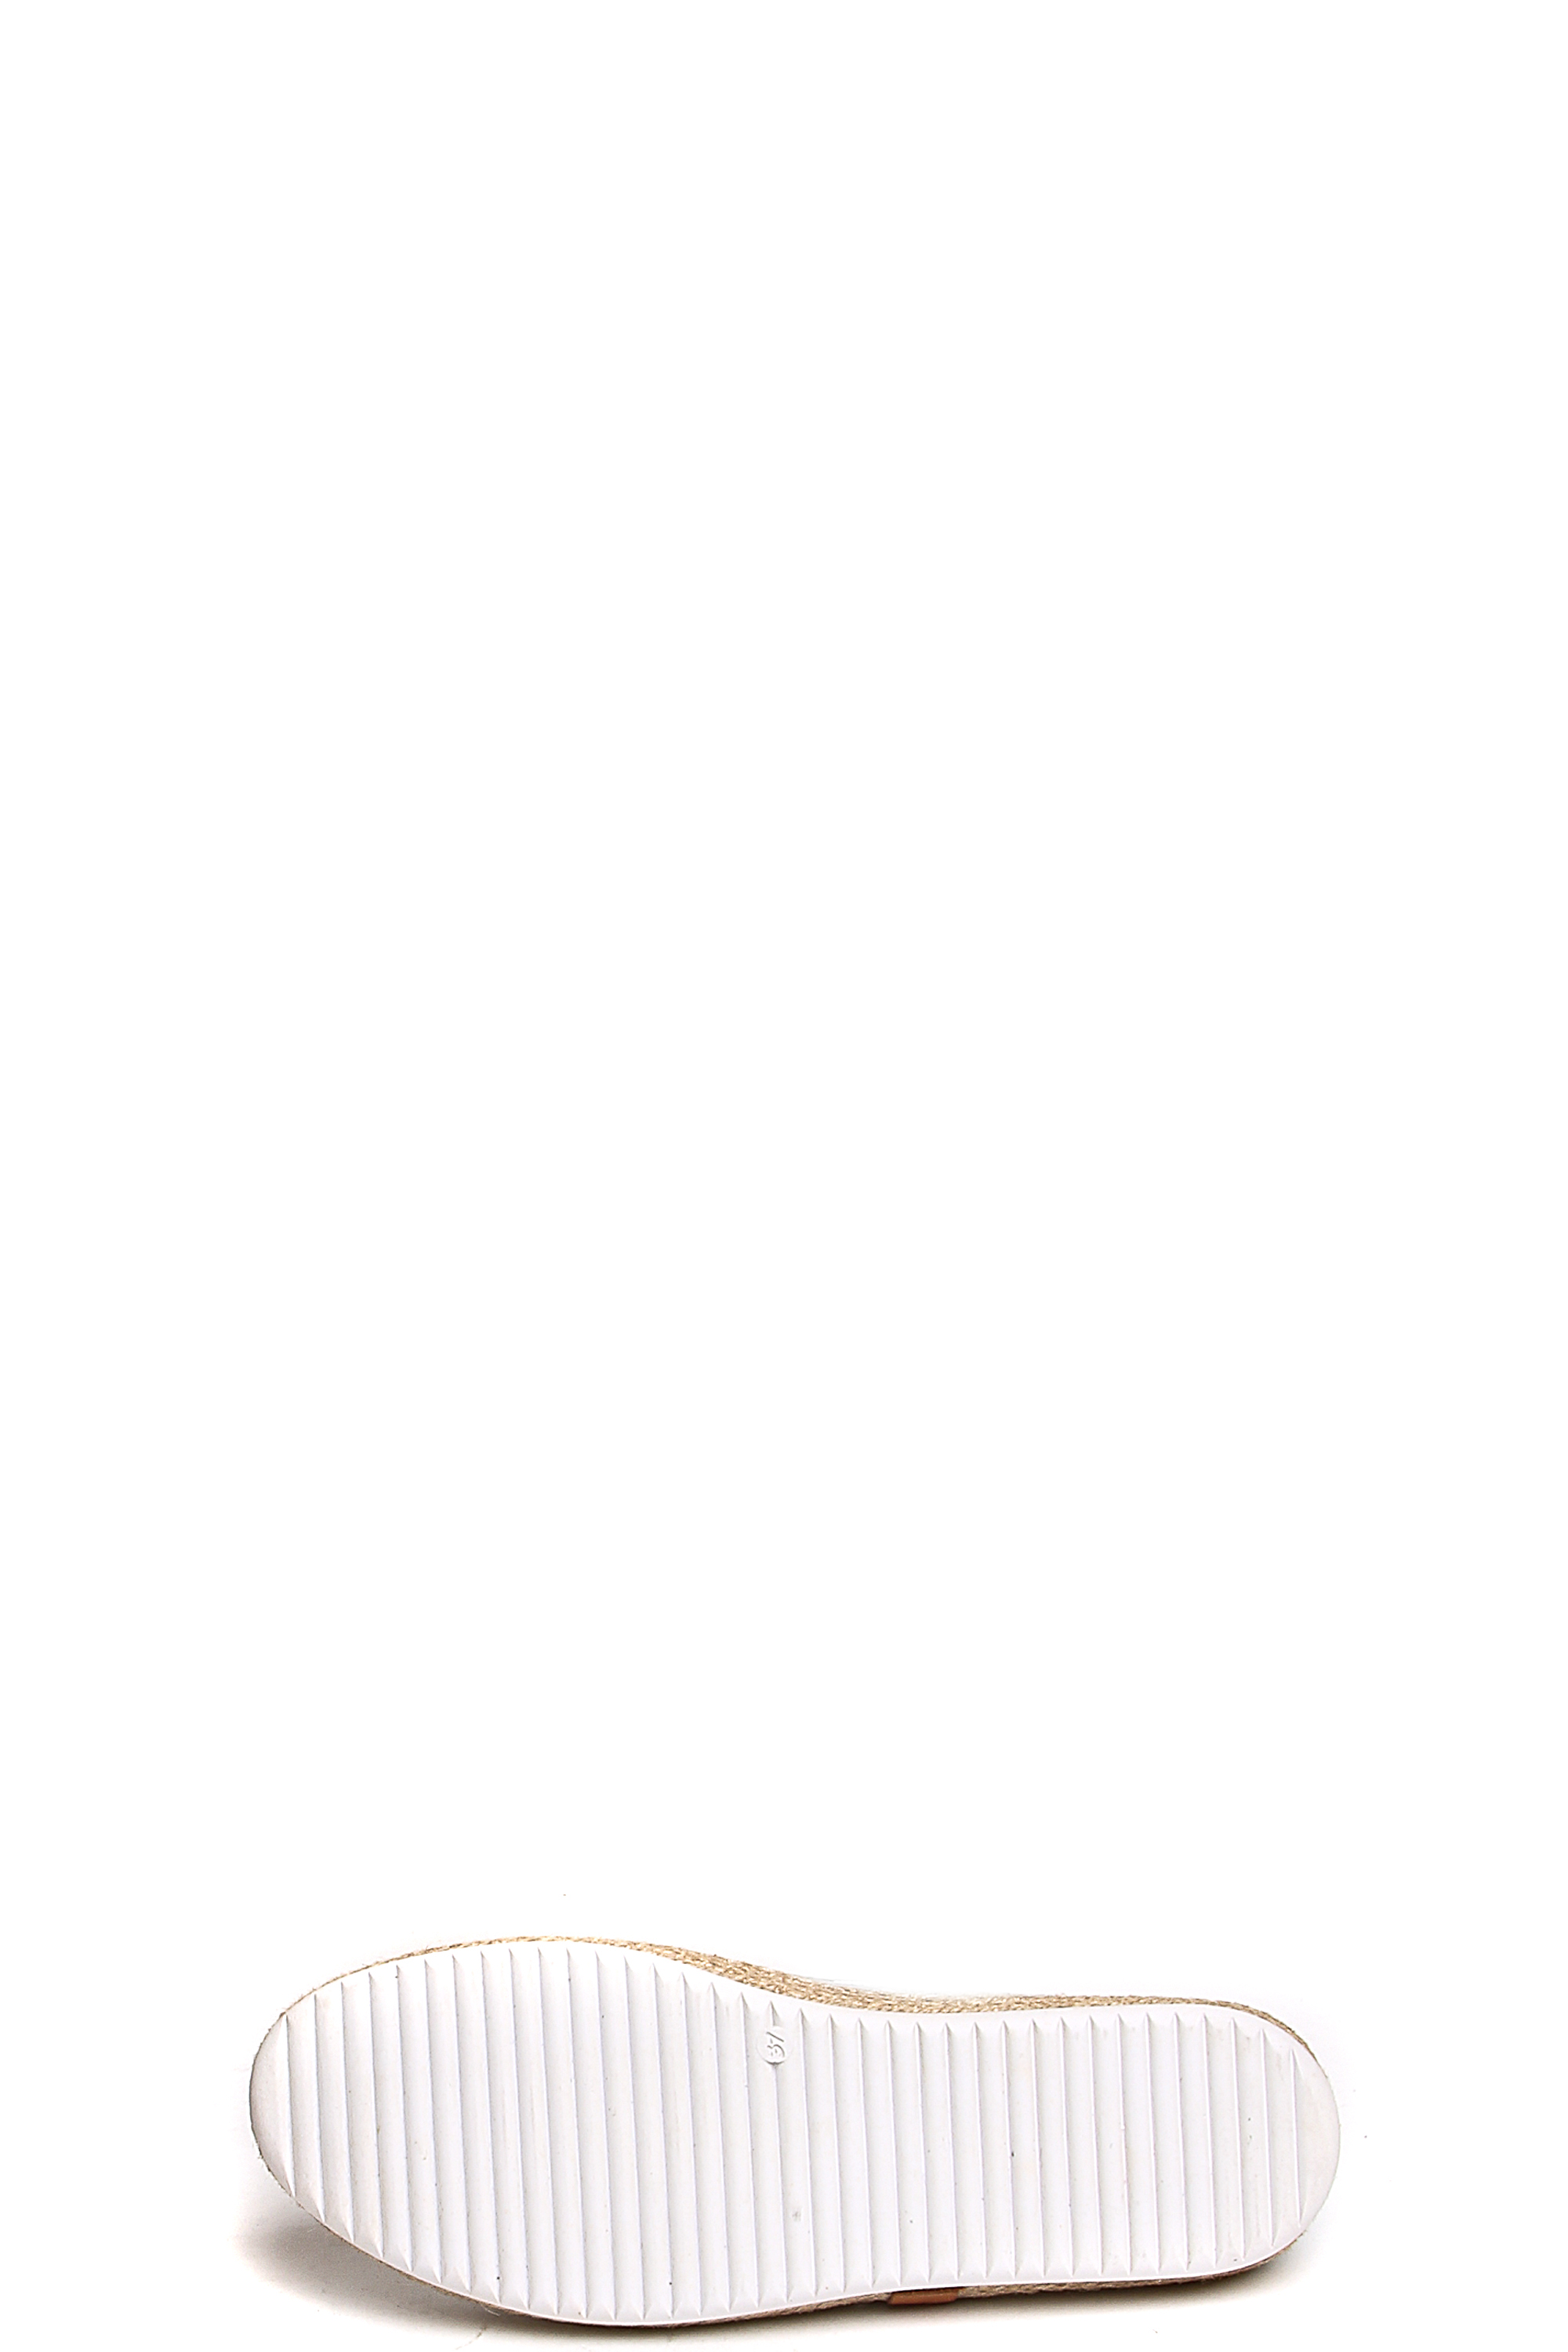 181570-4-1301 полуботинки  взрослый  жен. летн. натуральная кожа/без подкладки/термоэластопласт белы